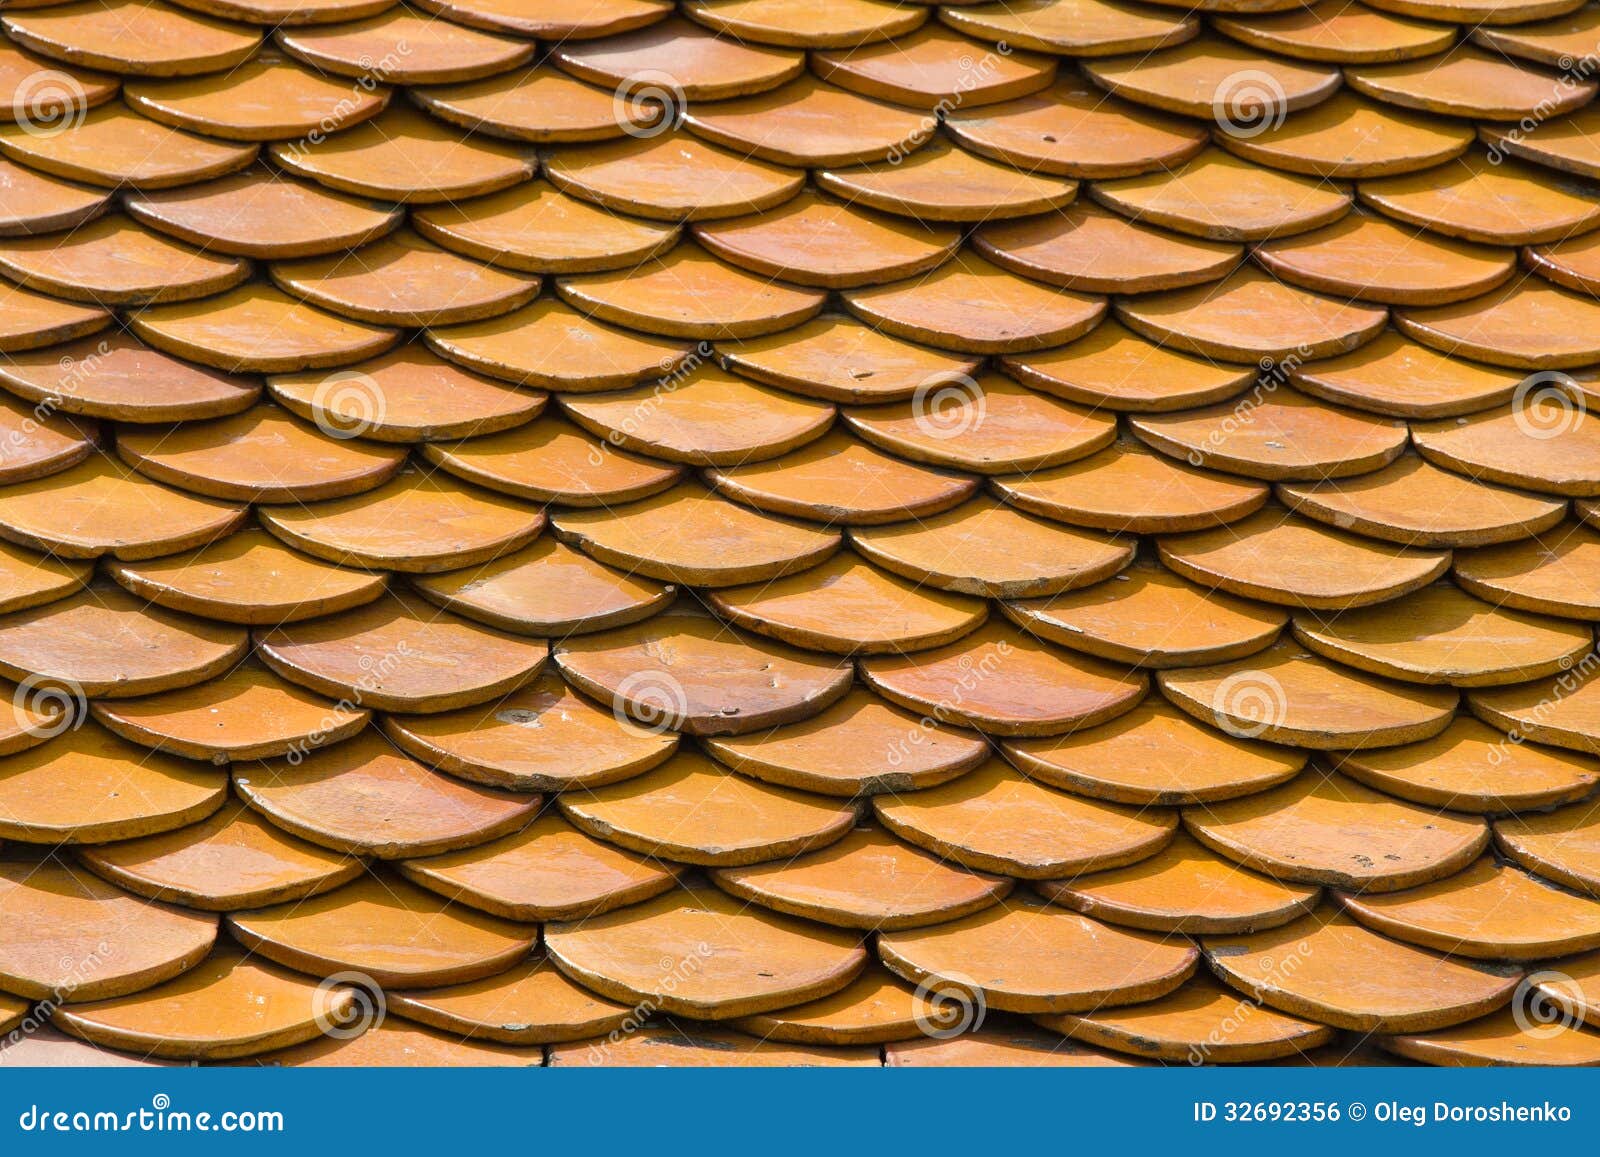 Orange roof tiles stock photo. Image of orange, construction - 32692356